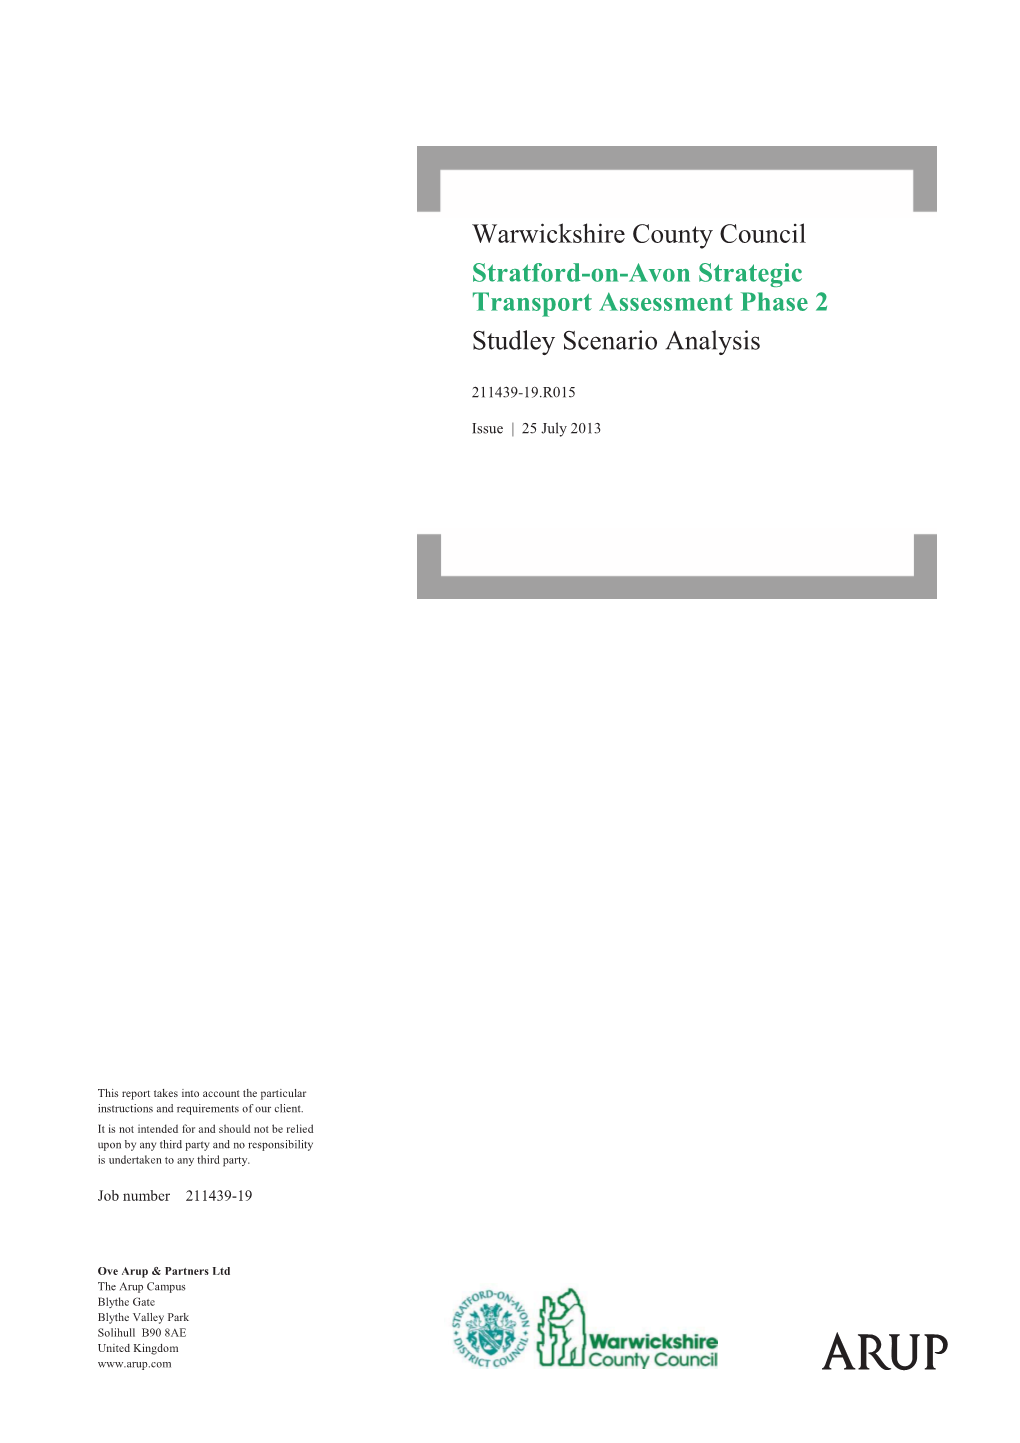 Warwickshire County Council Stratford-On-Avon Strategic Transport Assessment Phase 2 Studley Scenario Analysis